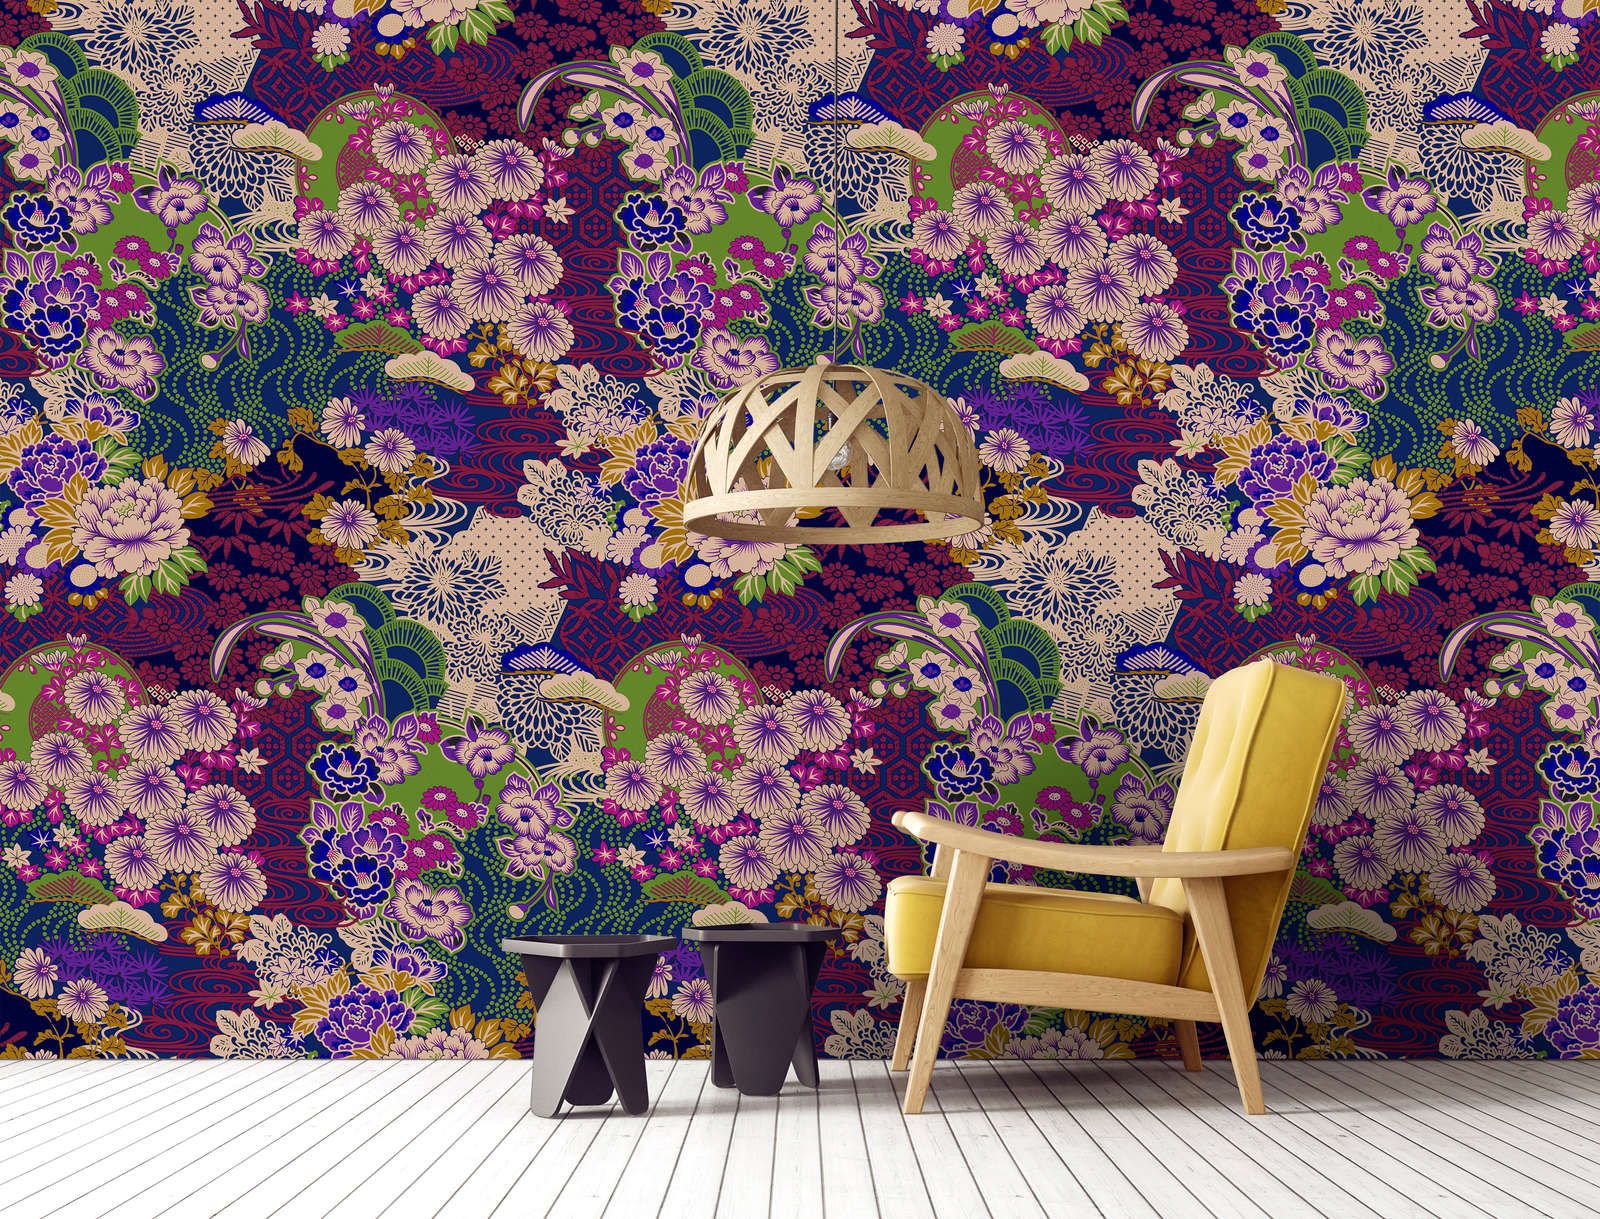             Photo wallpaper »kimo 2« - Abstract flower artwork - Purple, Green | Matt, Smooth non-woven fabric
        